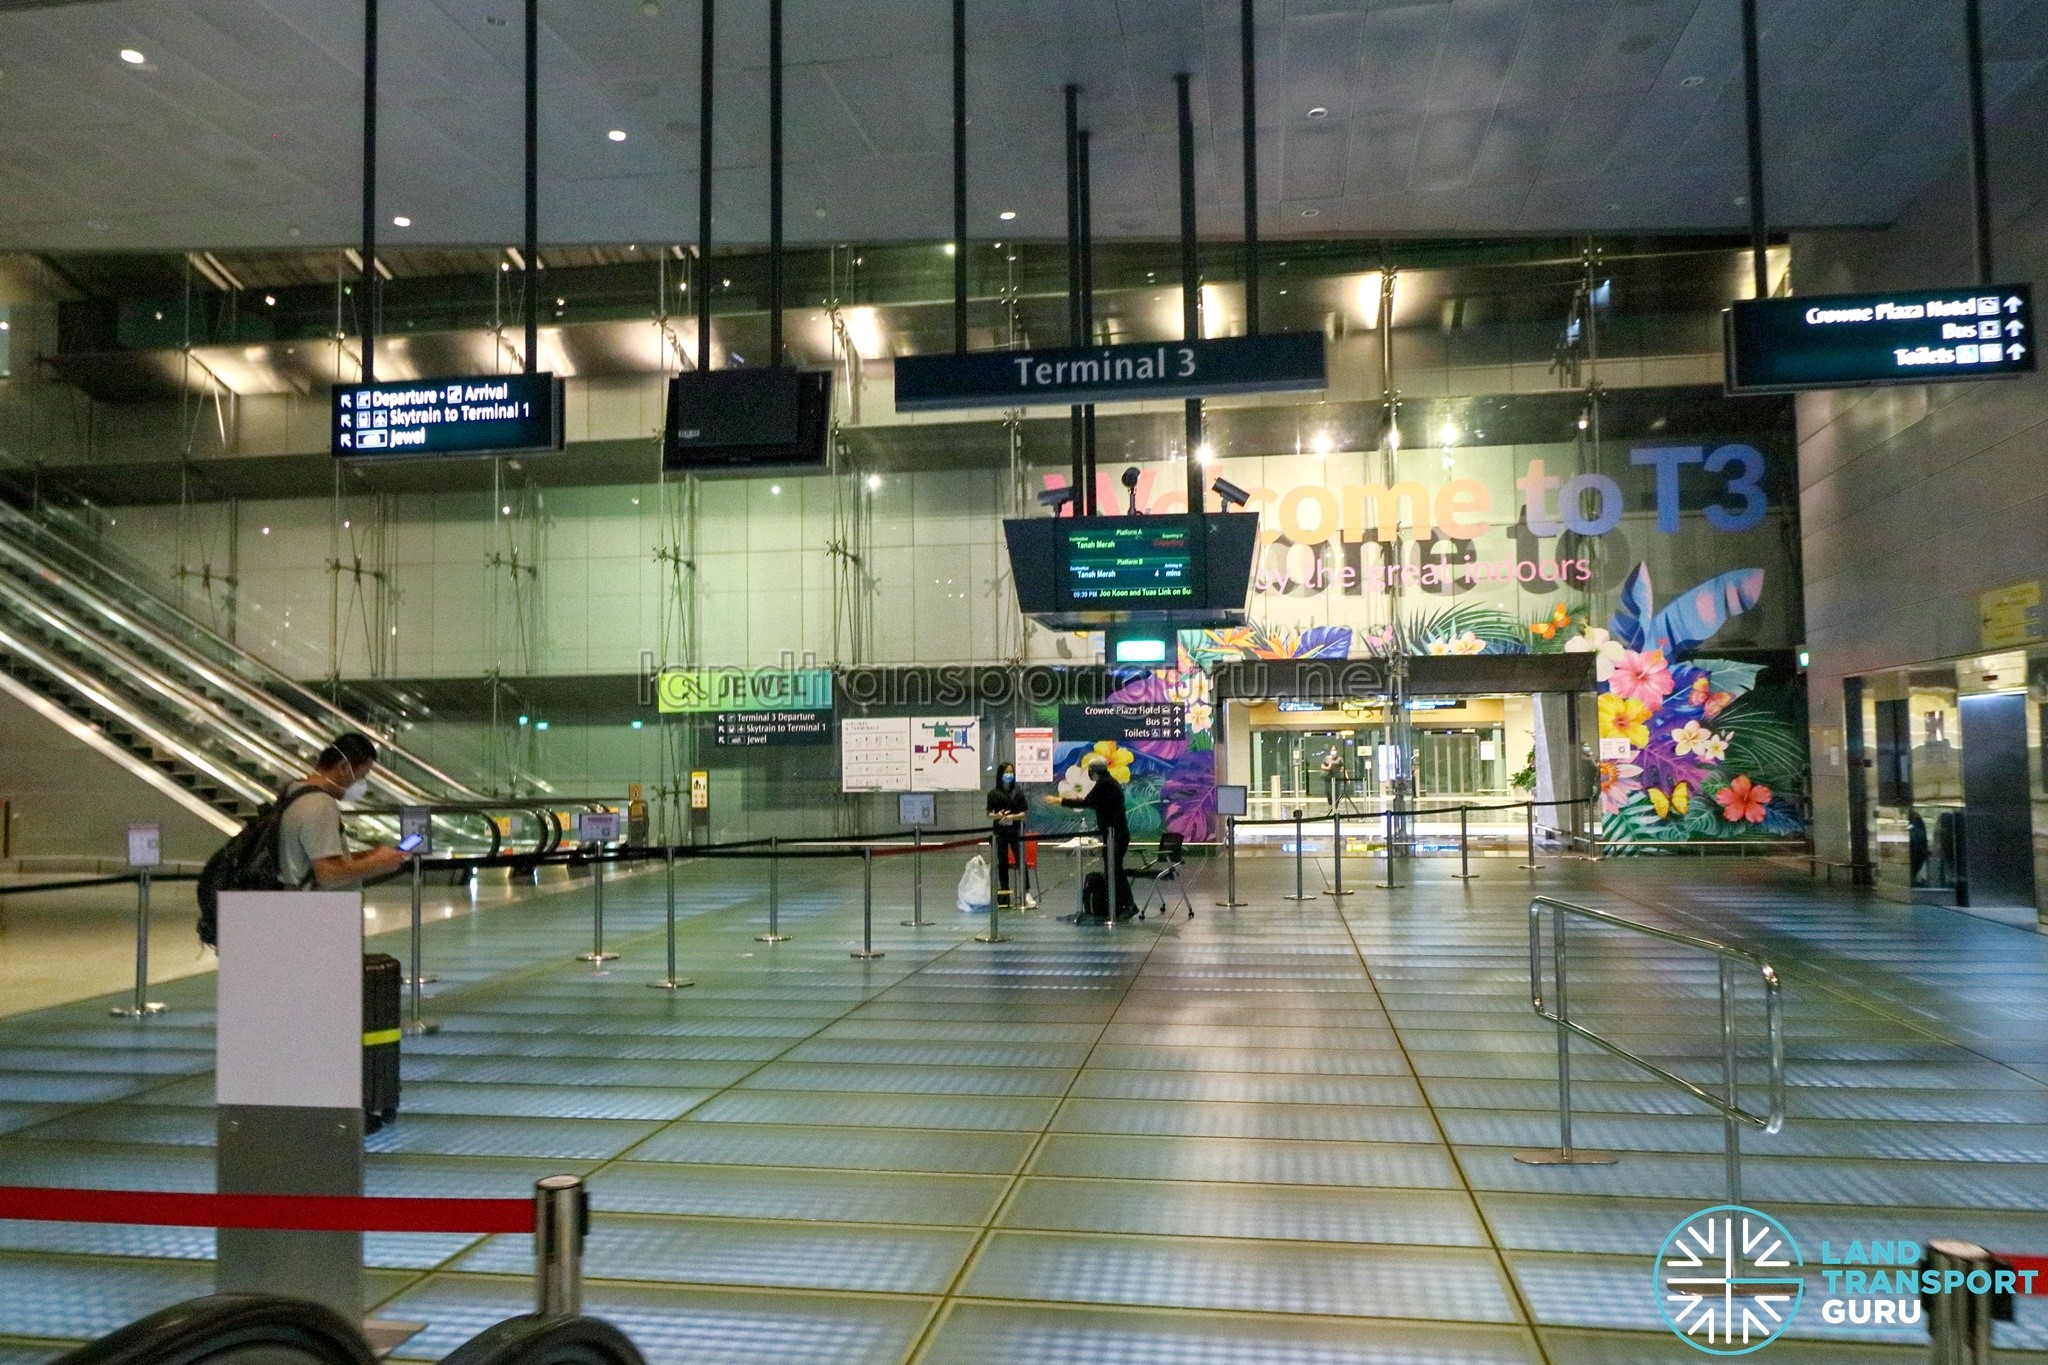 Singapore Changi Airport Terminal 3 Tour VR360 April 2021 